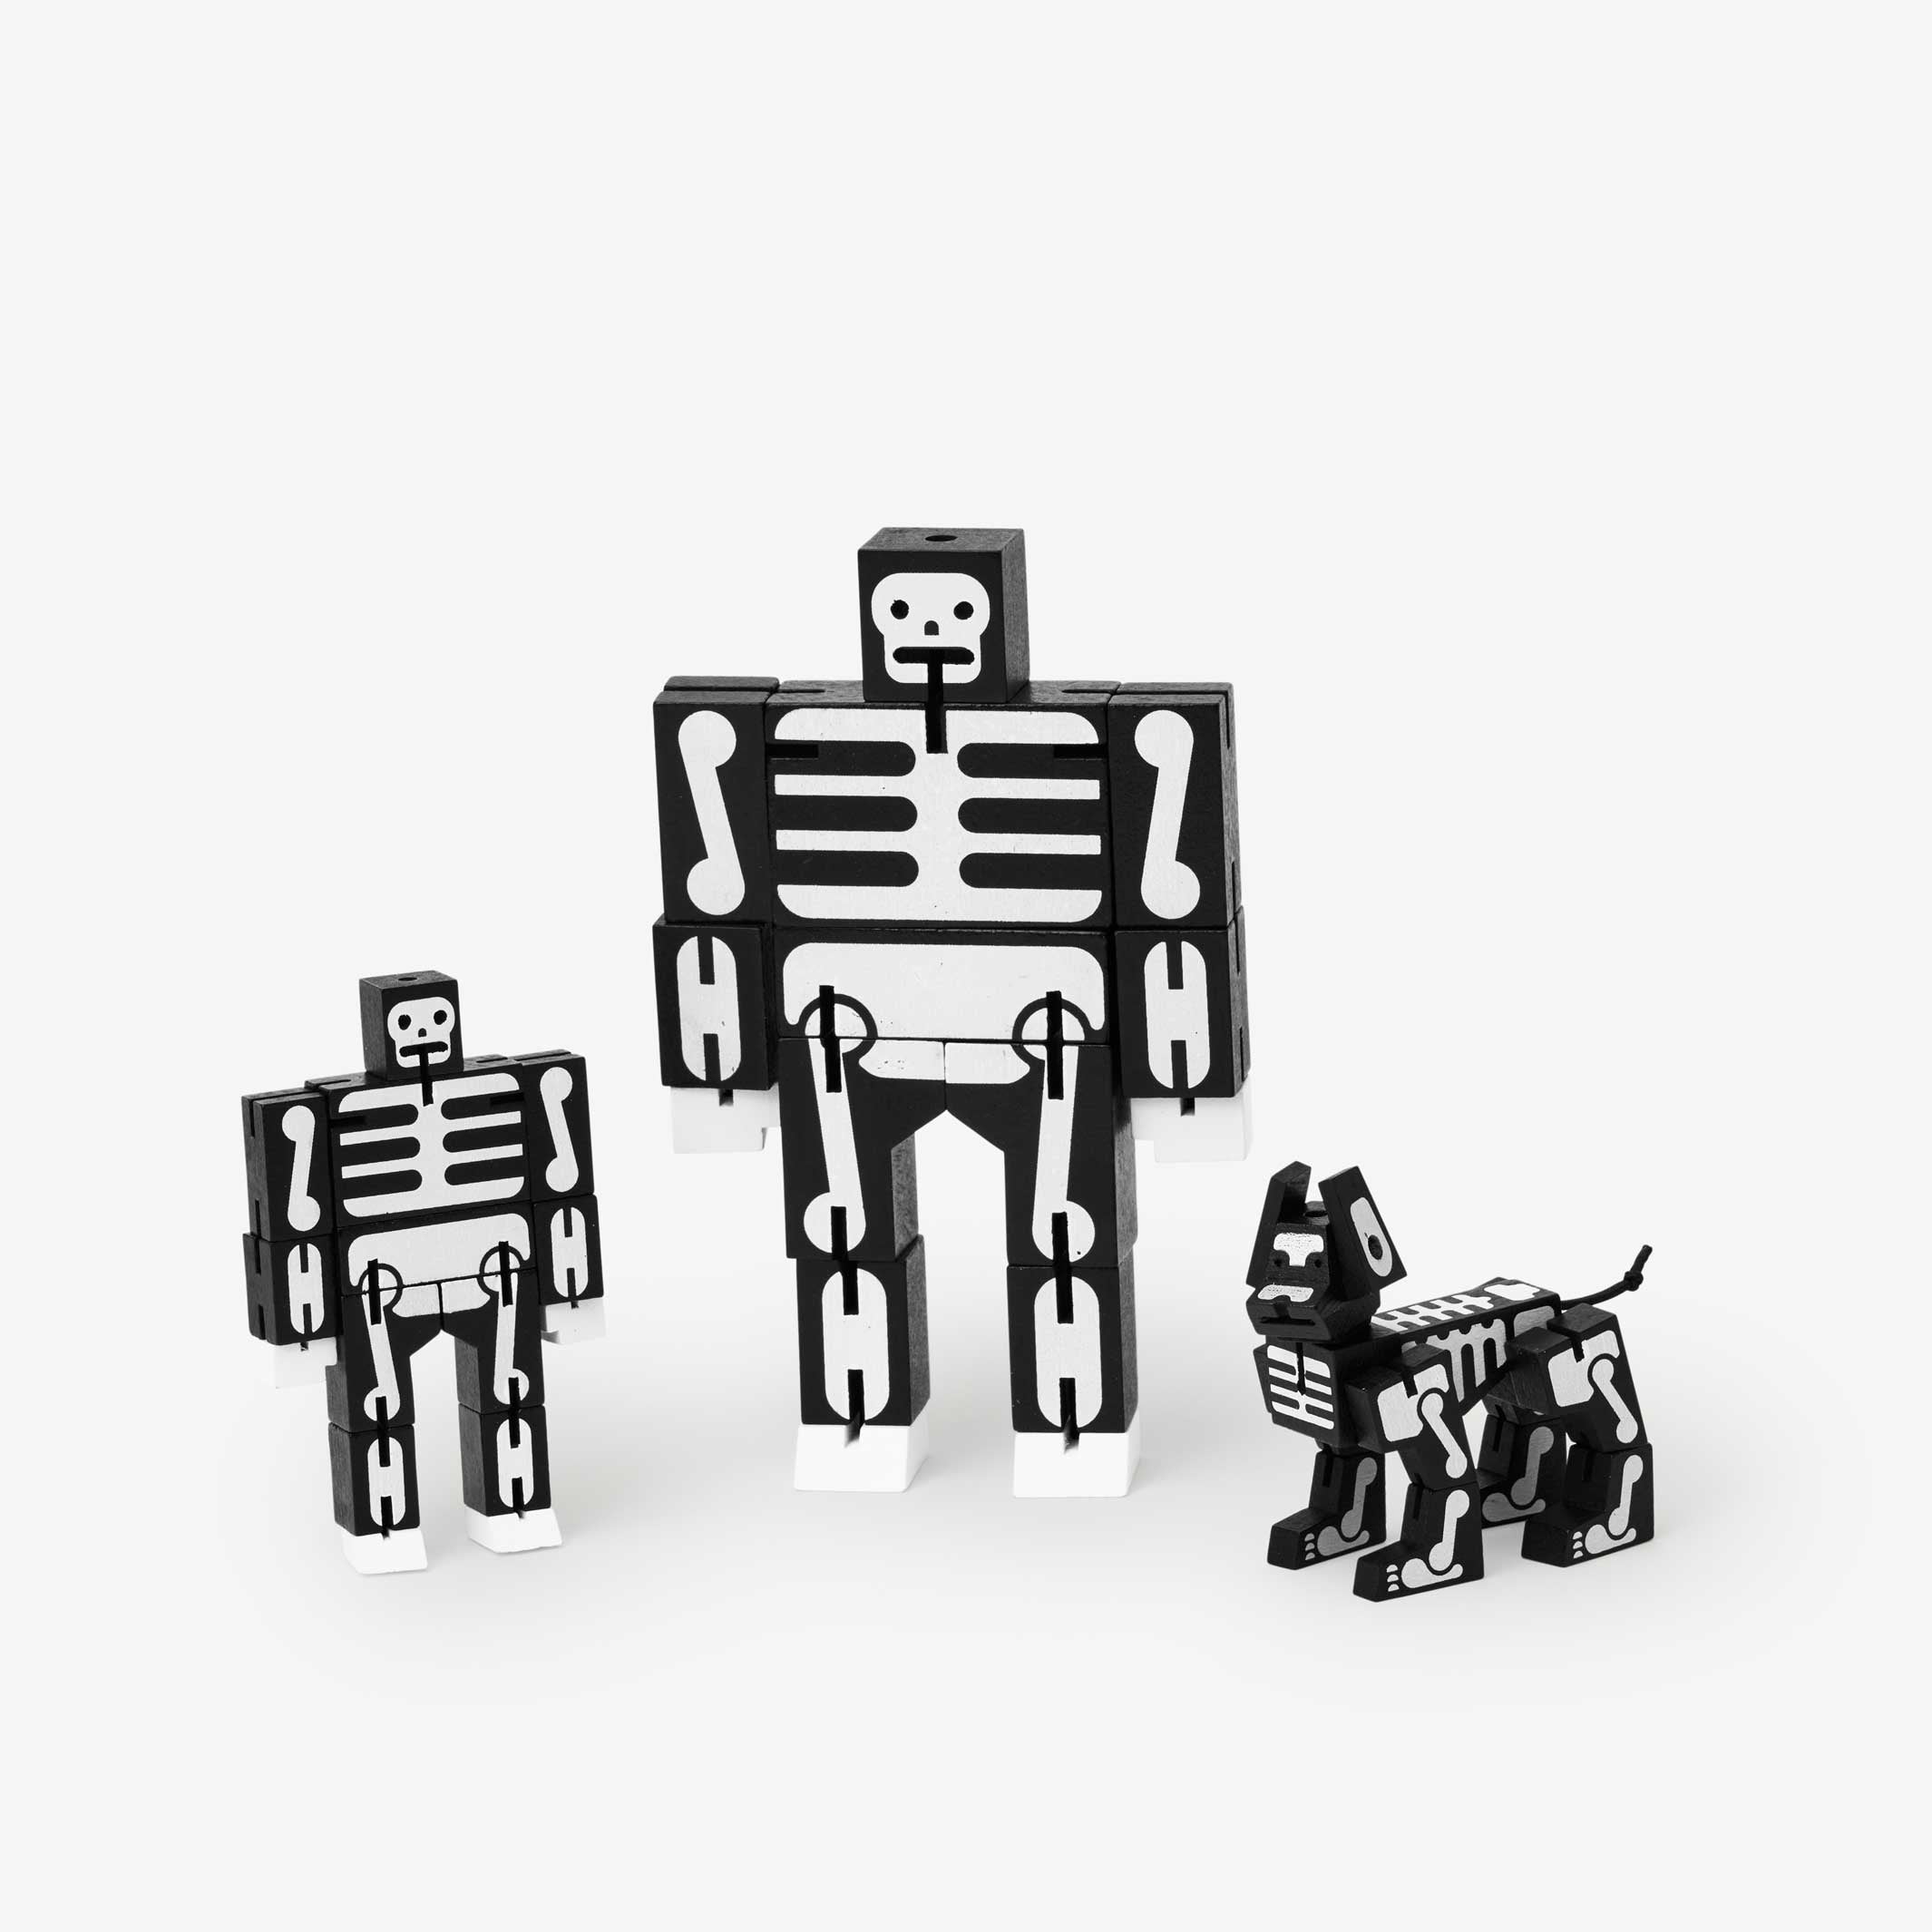 MILO CUBEBOT Micro SKELETT | 3D PUZZLE ROBOTER | David Weeks | Areaware